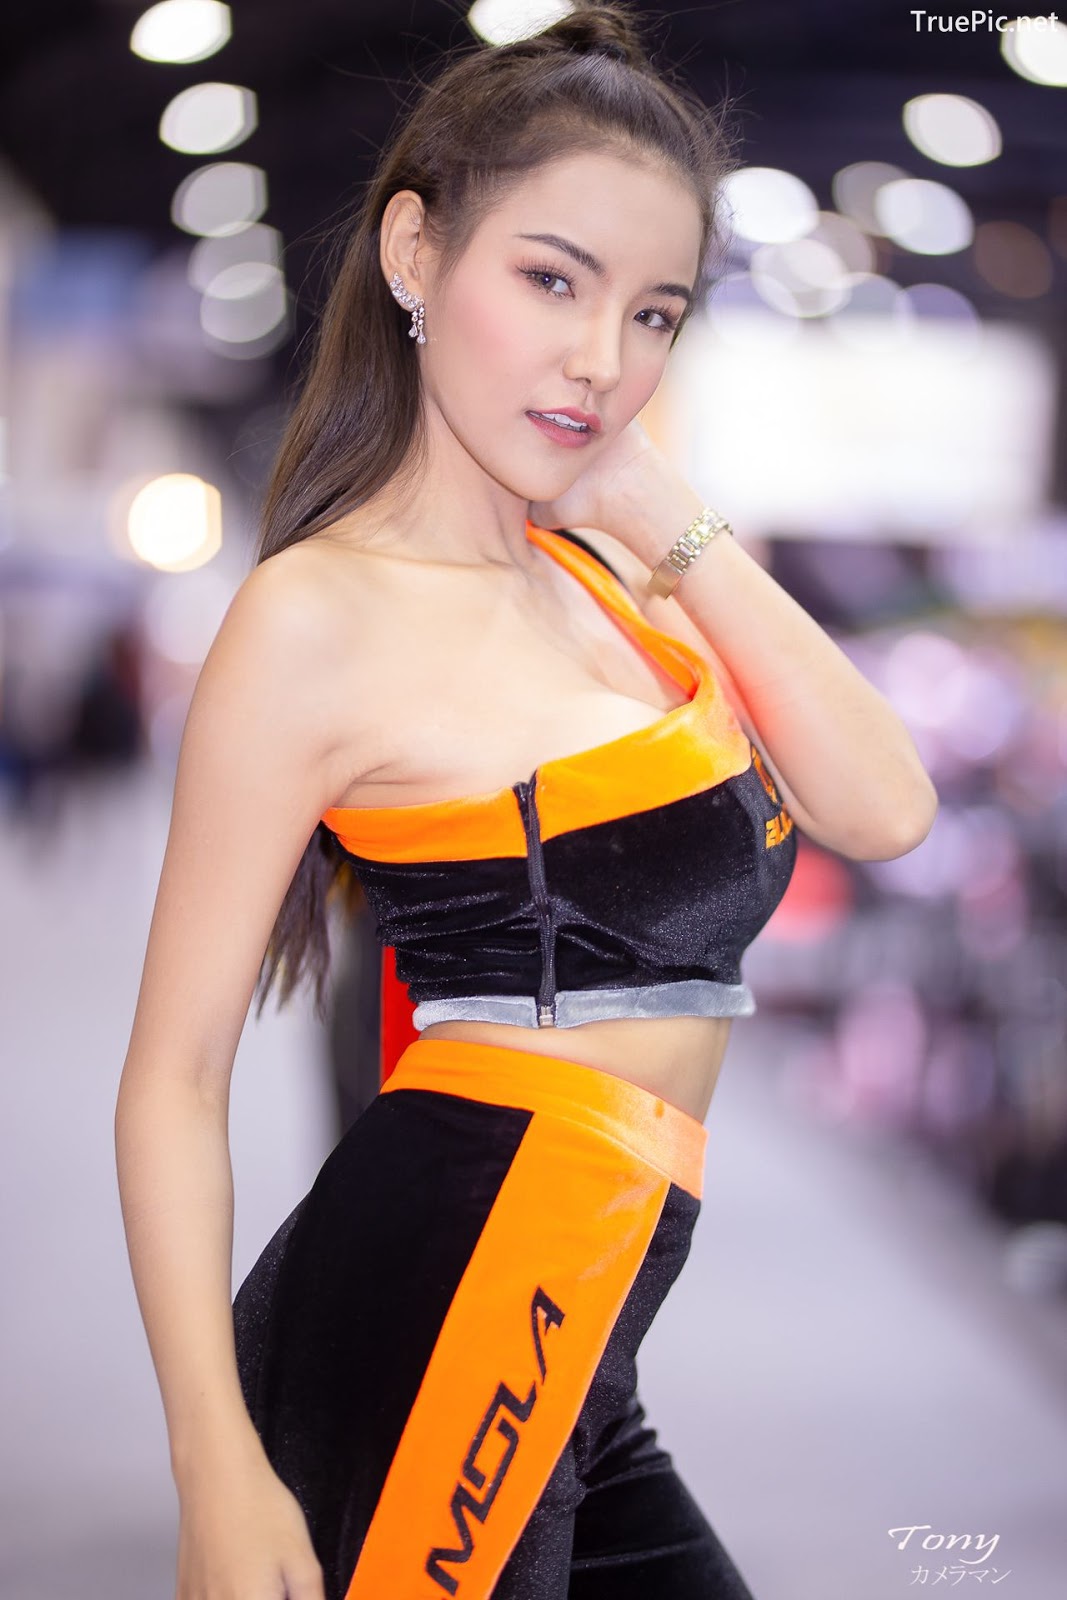 Thailand Hot Model Thai Racing Girl At Motor Expo 2019 Page 11 Of 14